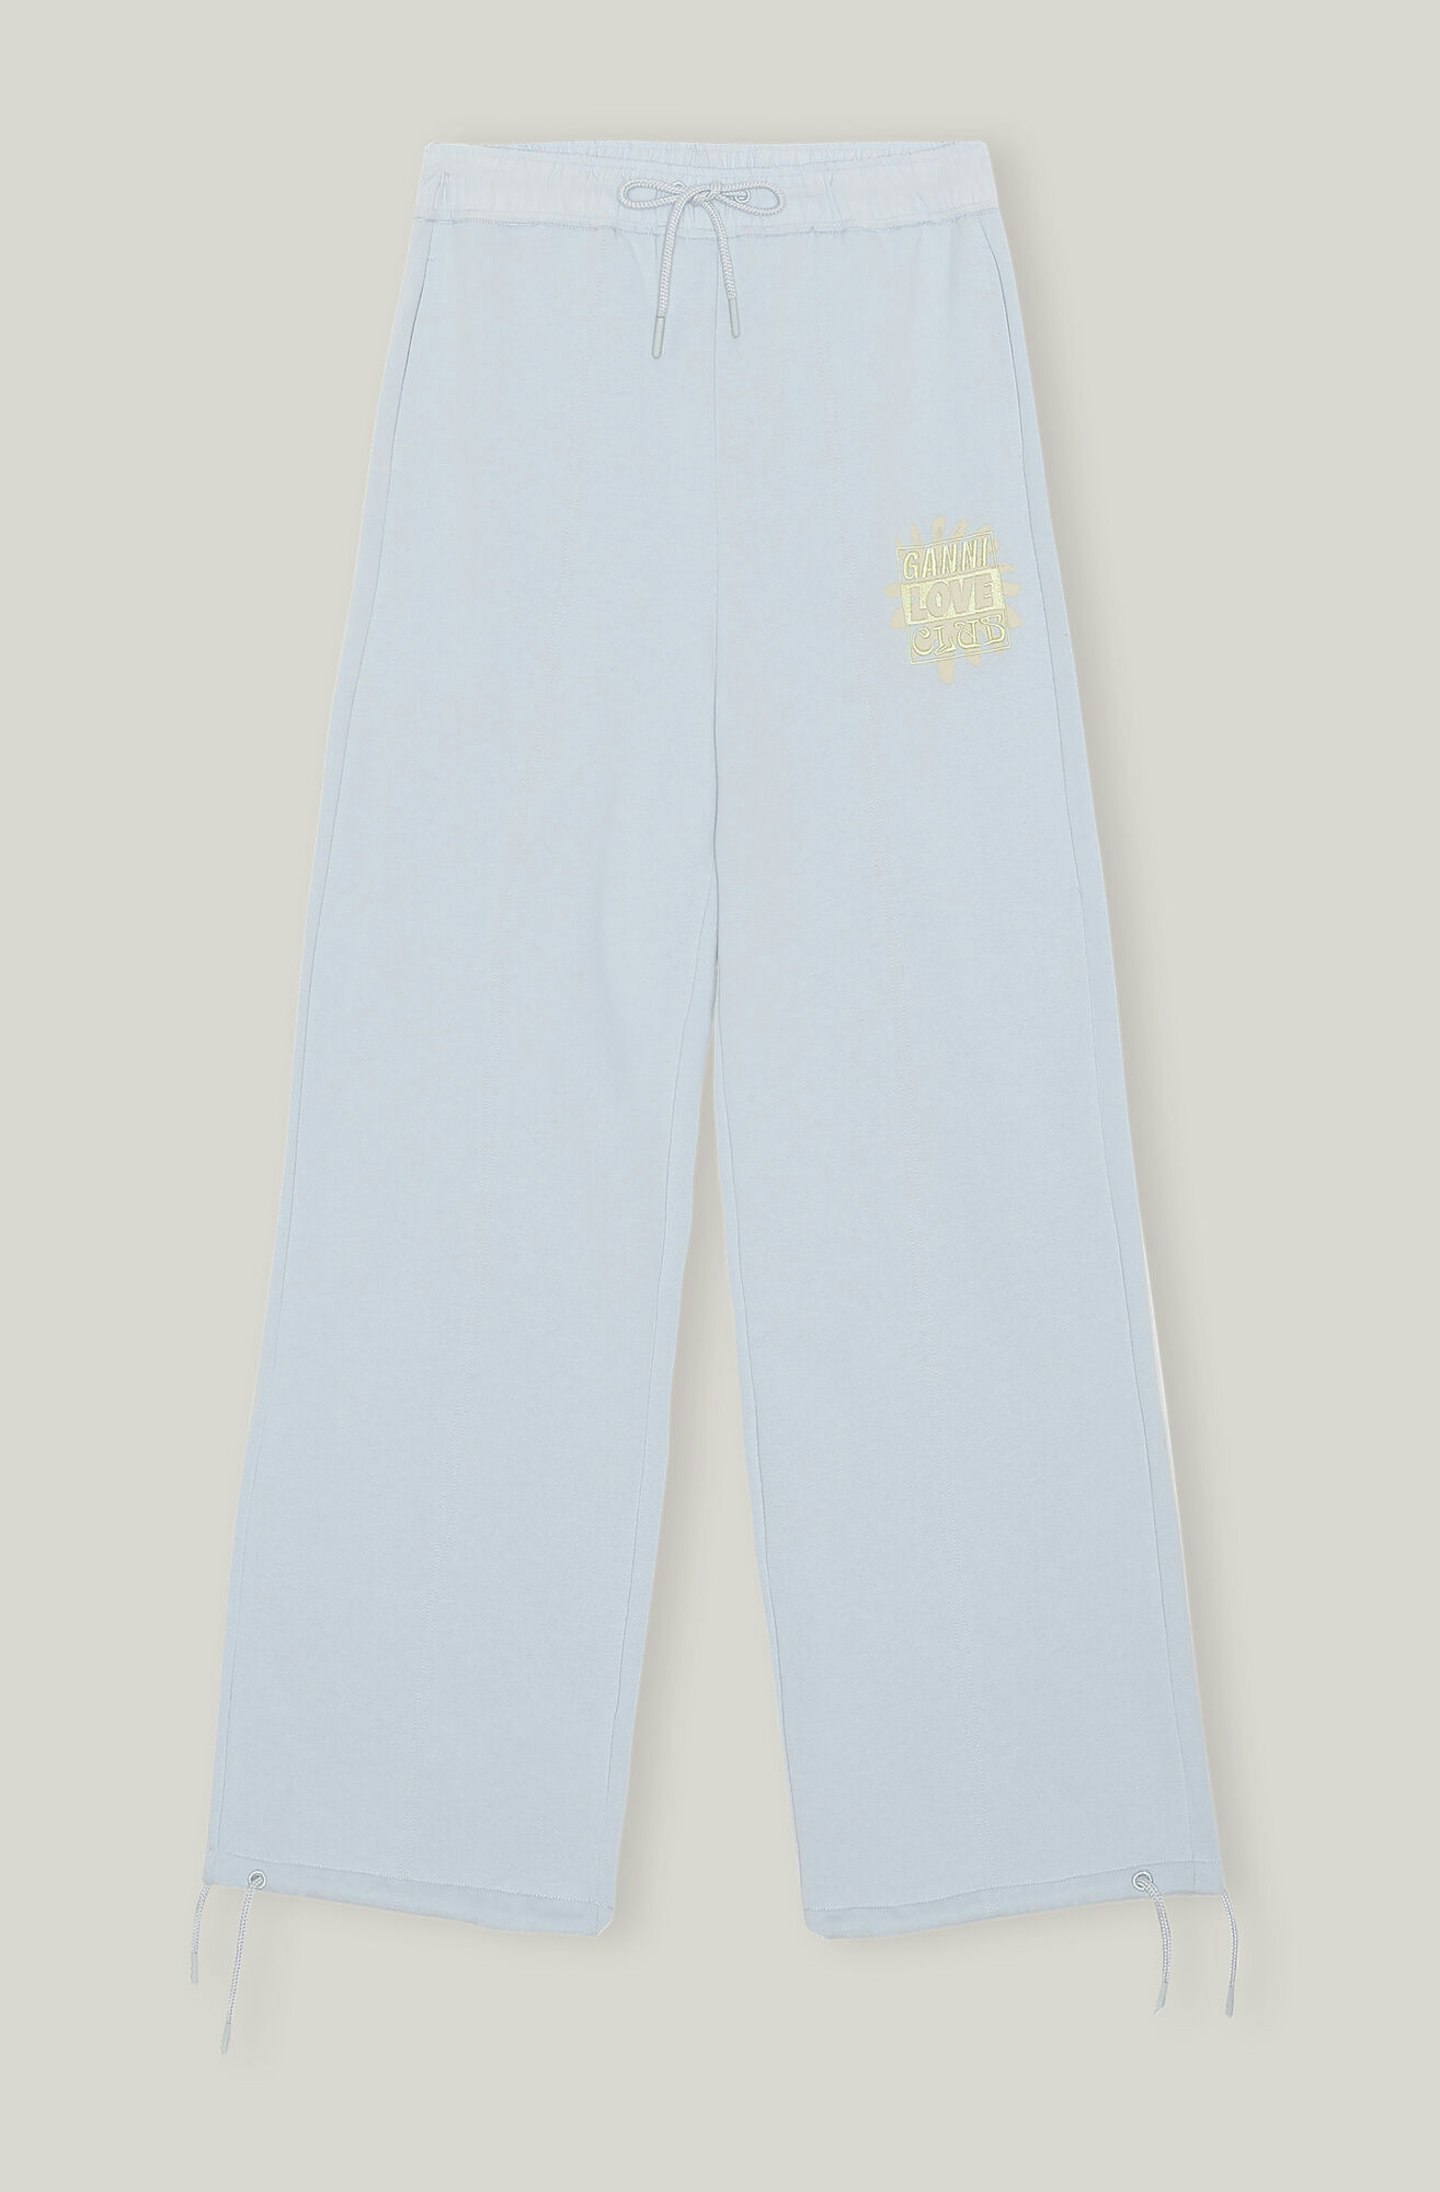 Ganni, Drawstring Isoli Sweatpants, £165